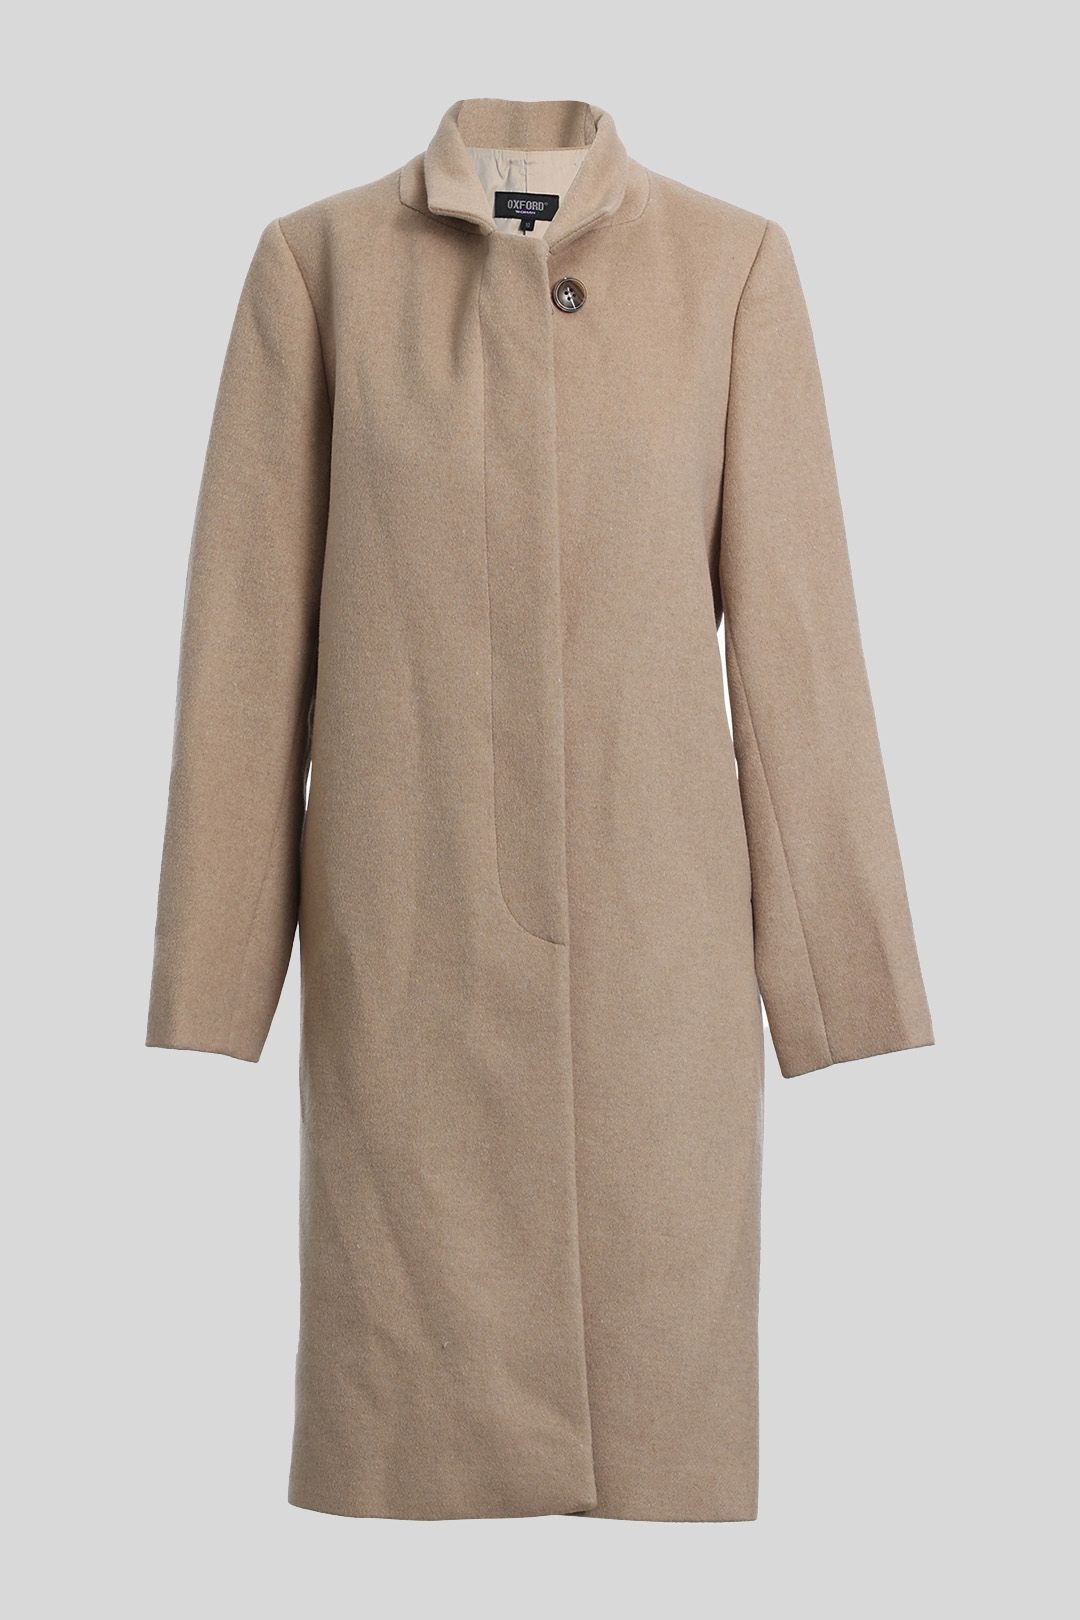 Oxford - Olive Wool Rich Long Coat